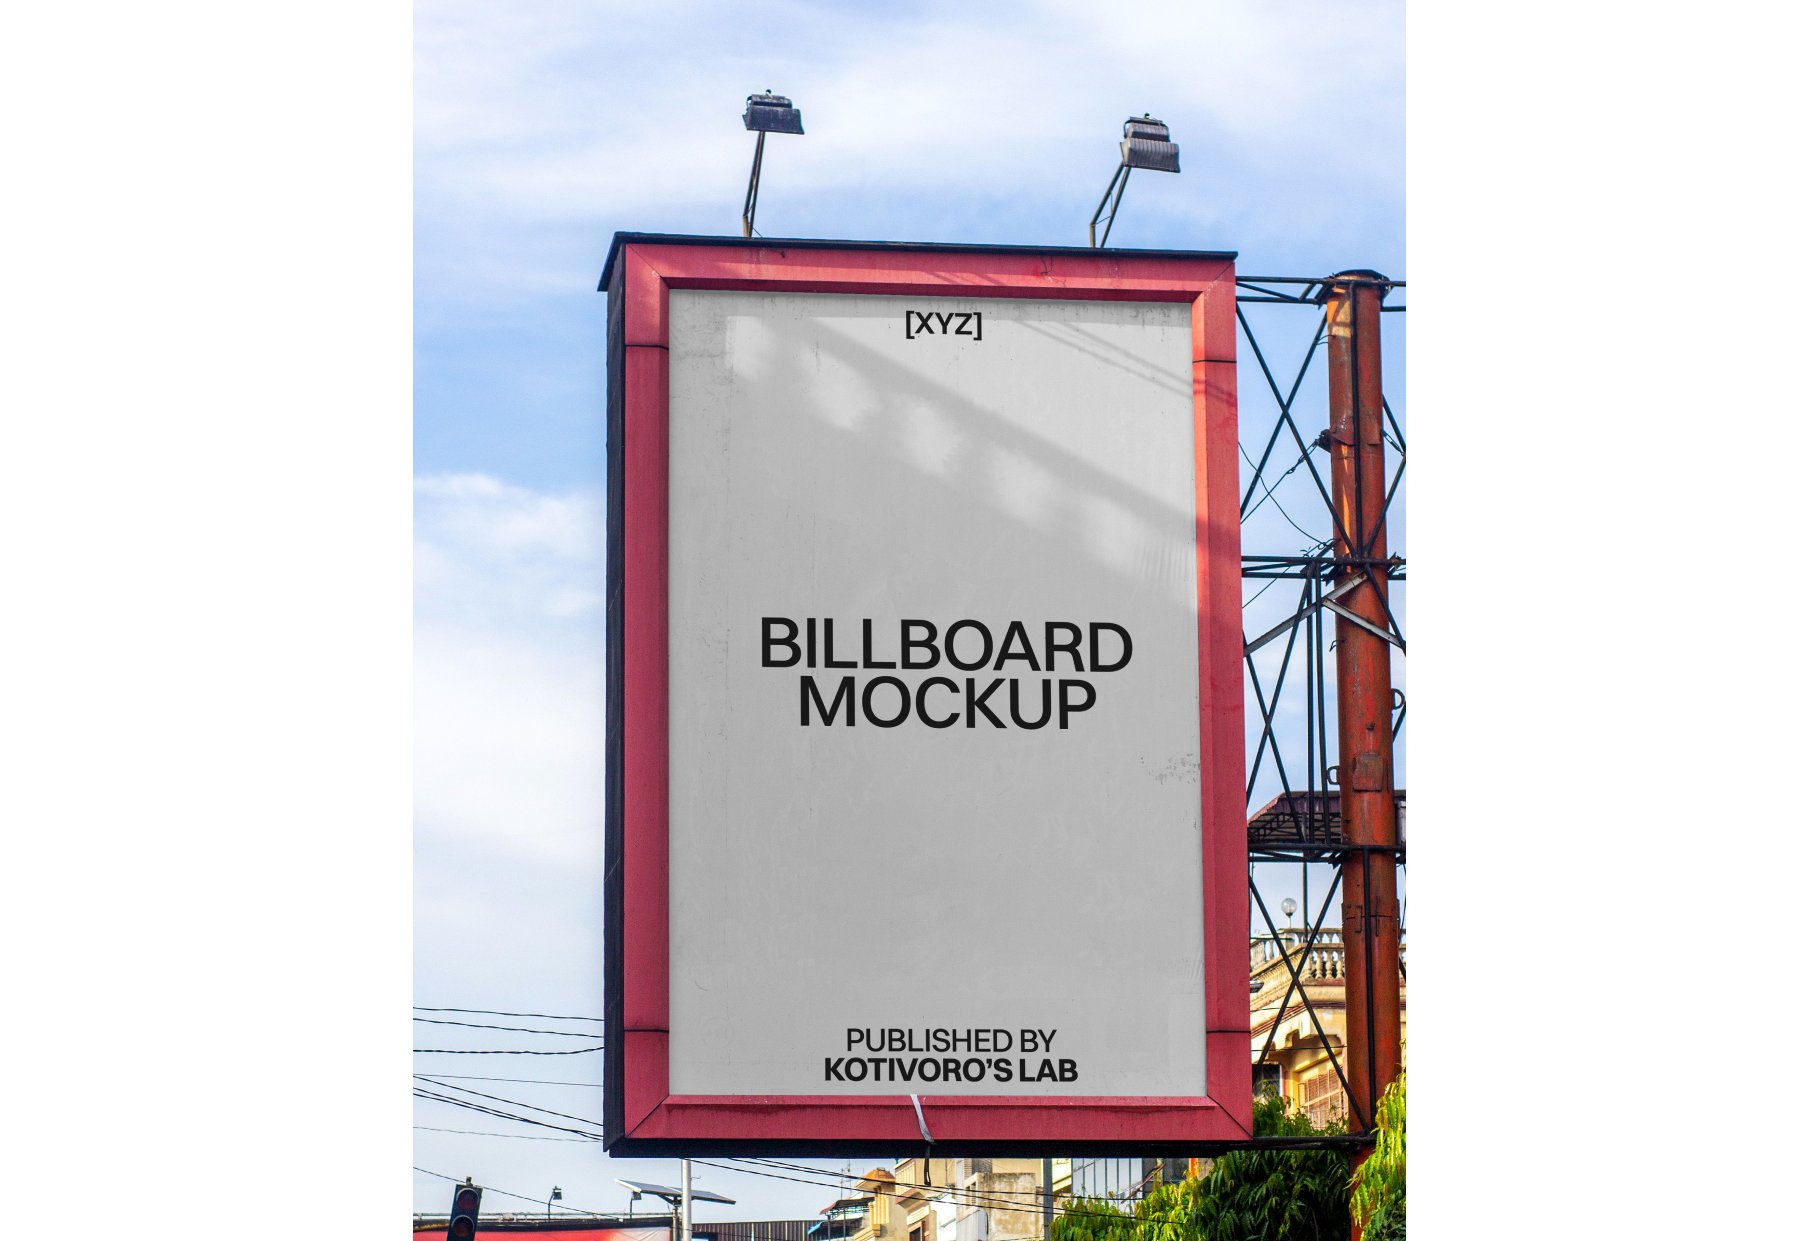 Billboard Mockup 08 cover image.